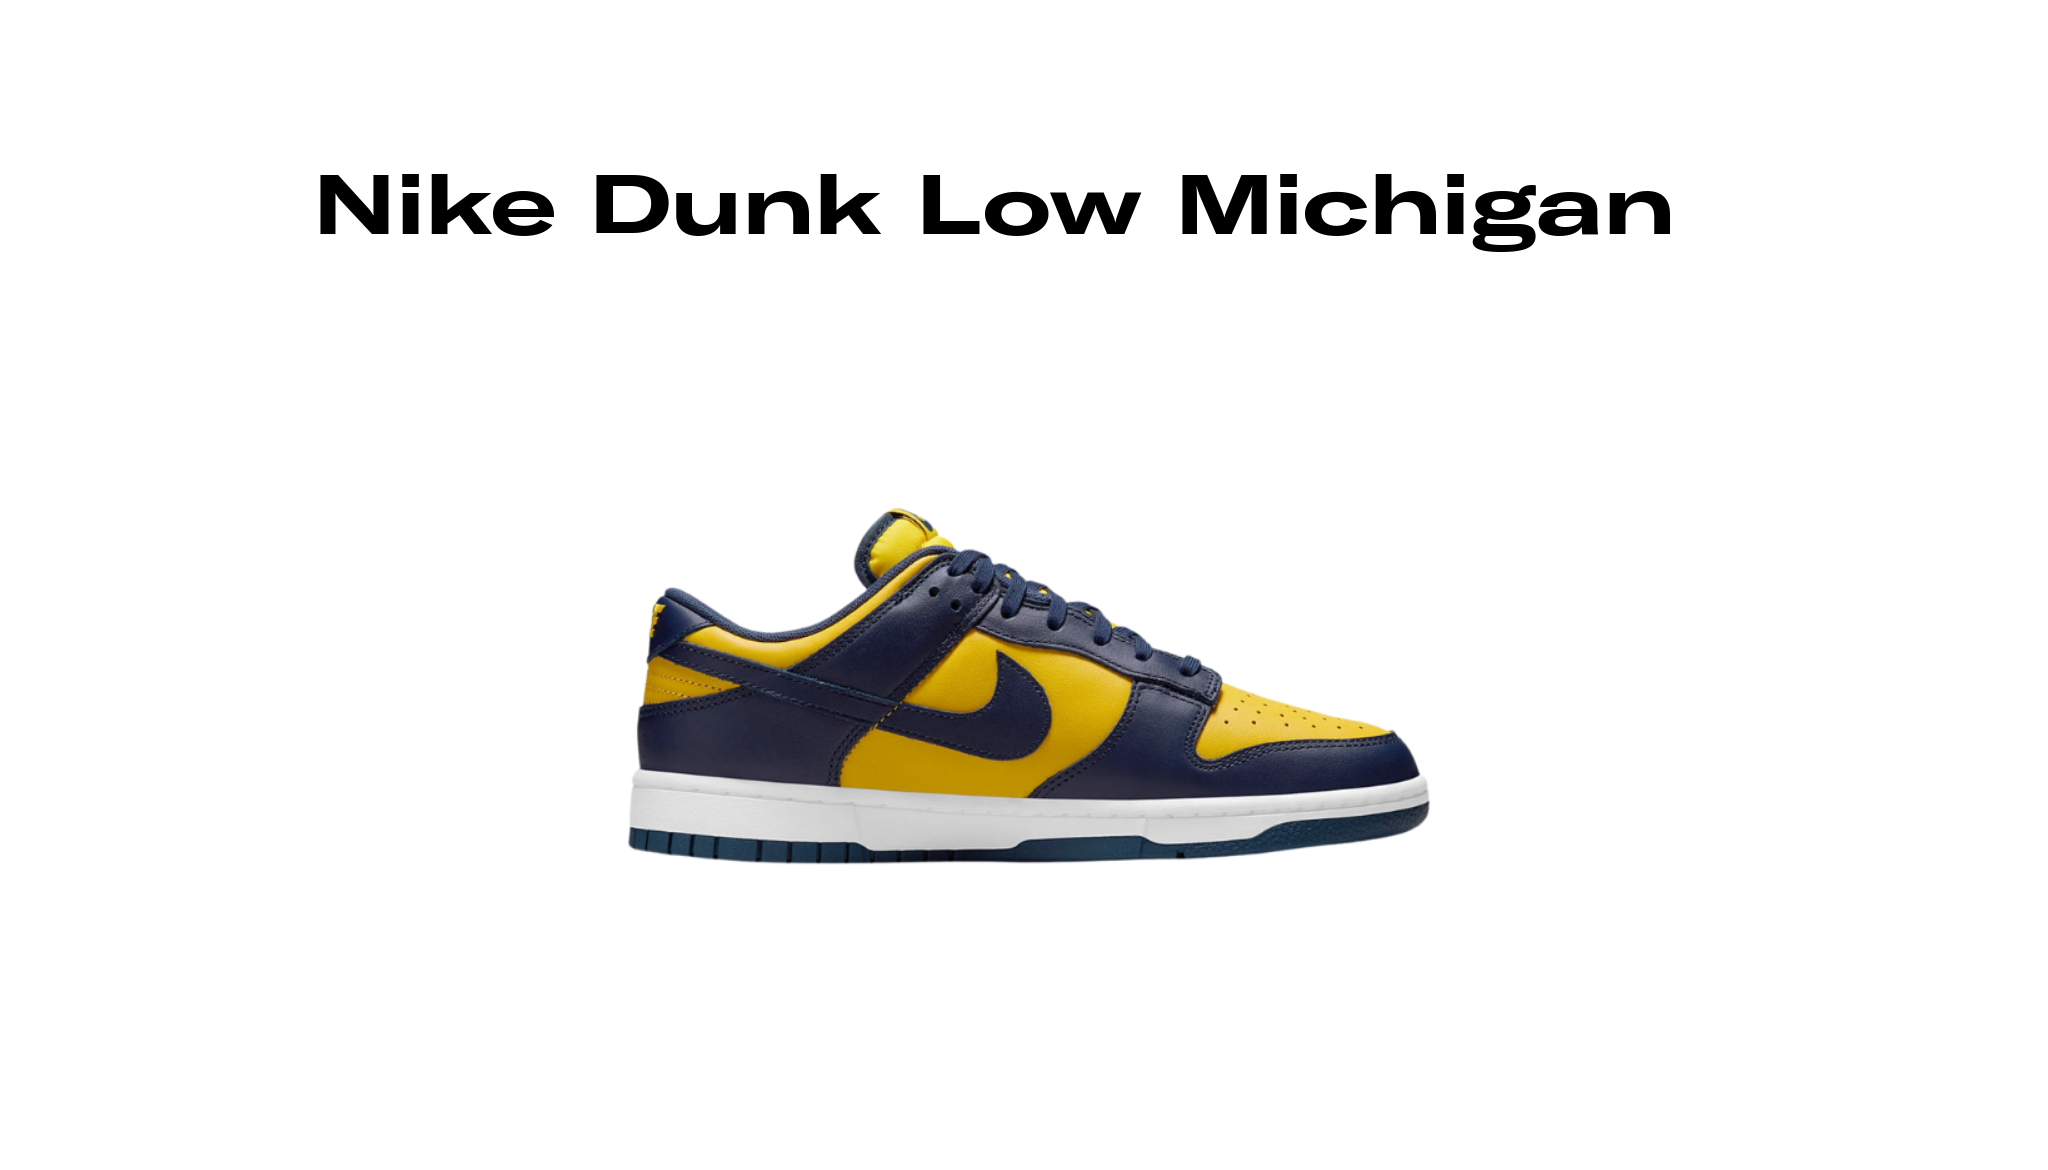 Nike dunk low michigan